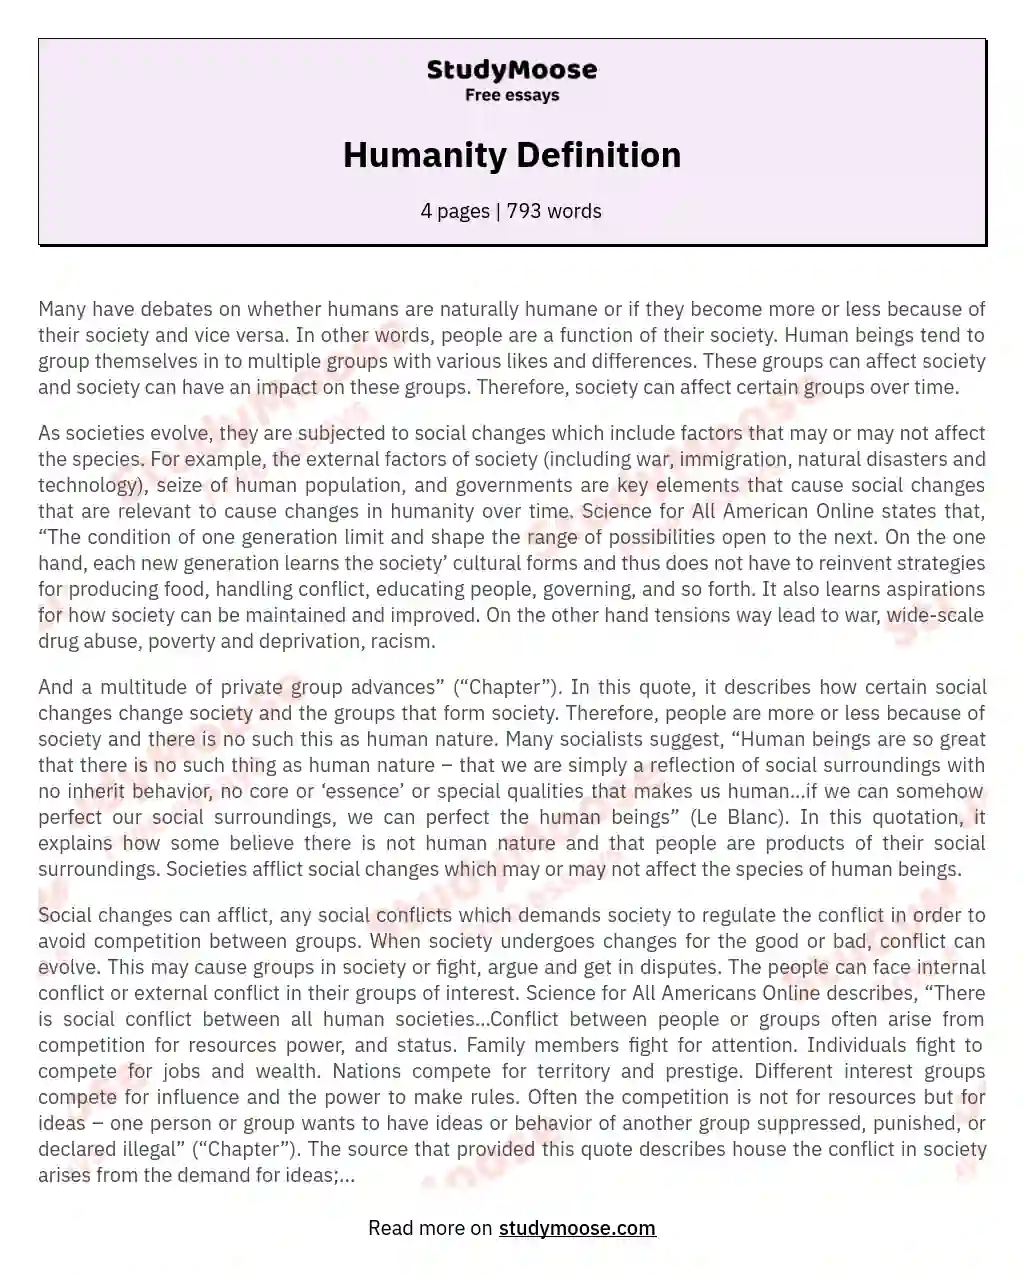 Humanity Definition essay